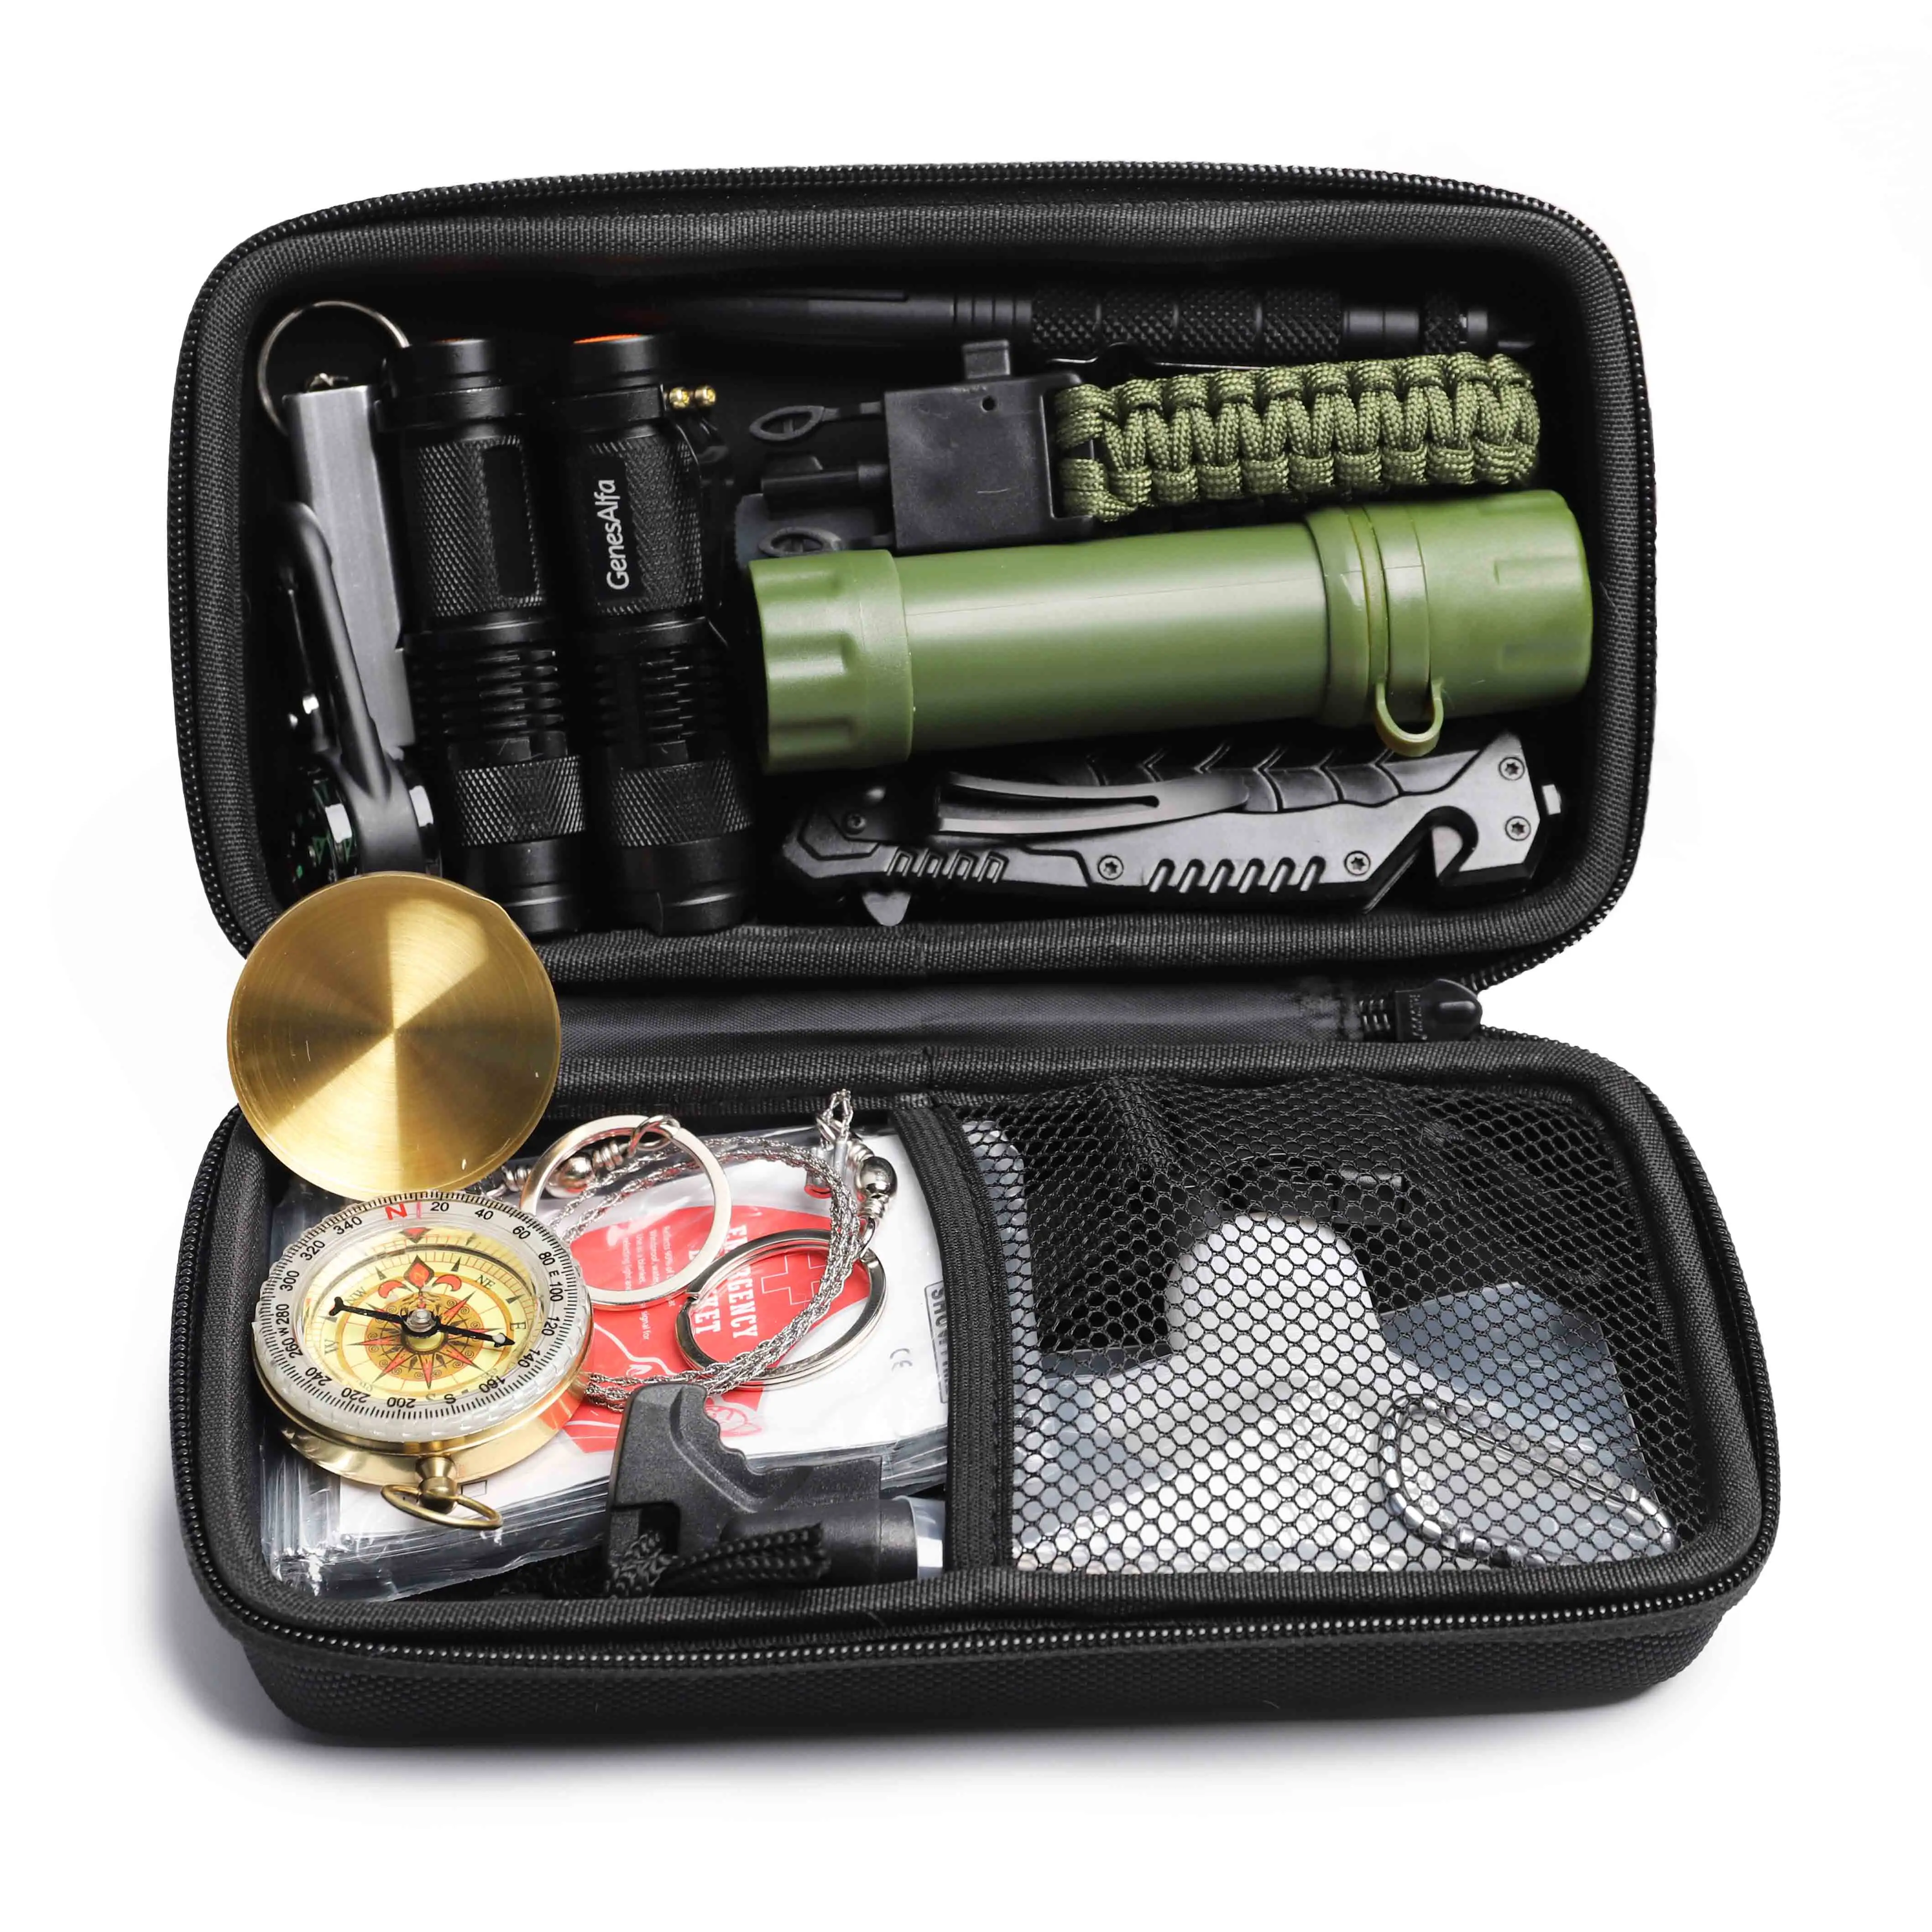 Custom survival kit outdoor for camping, 11-1 survival kit hiking best Emergency Disaster